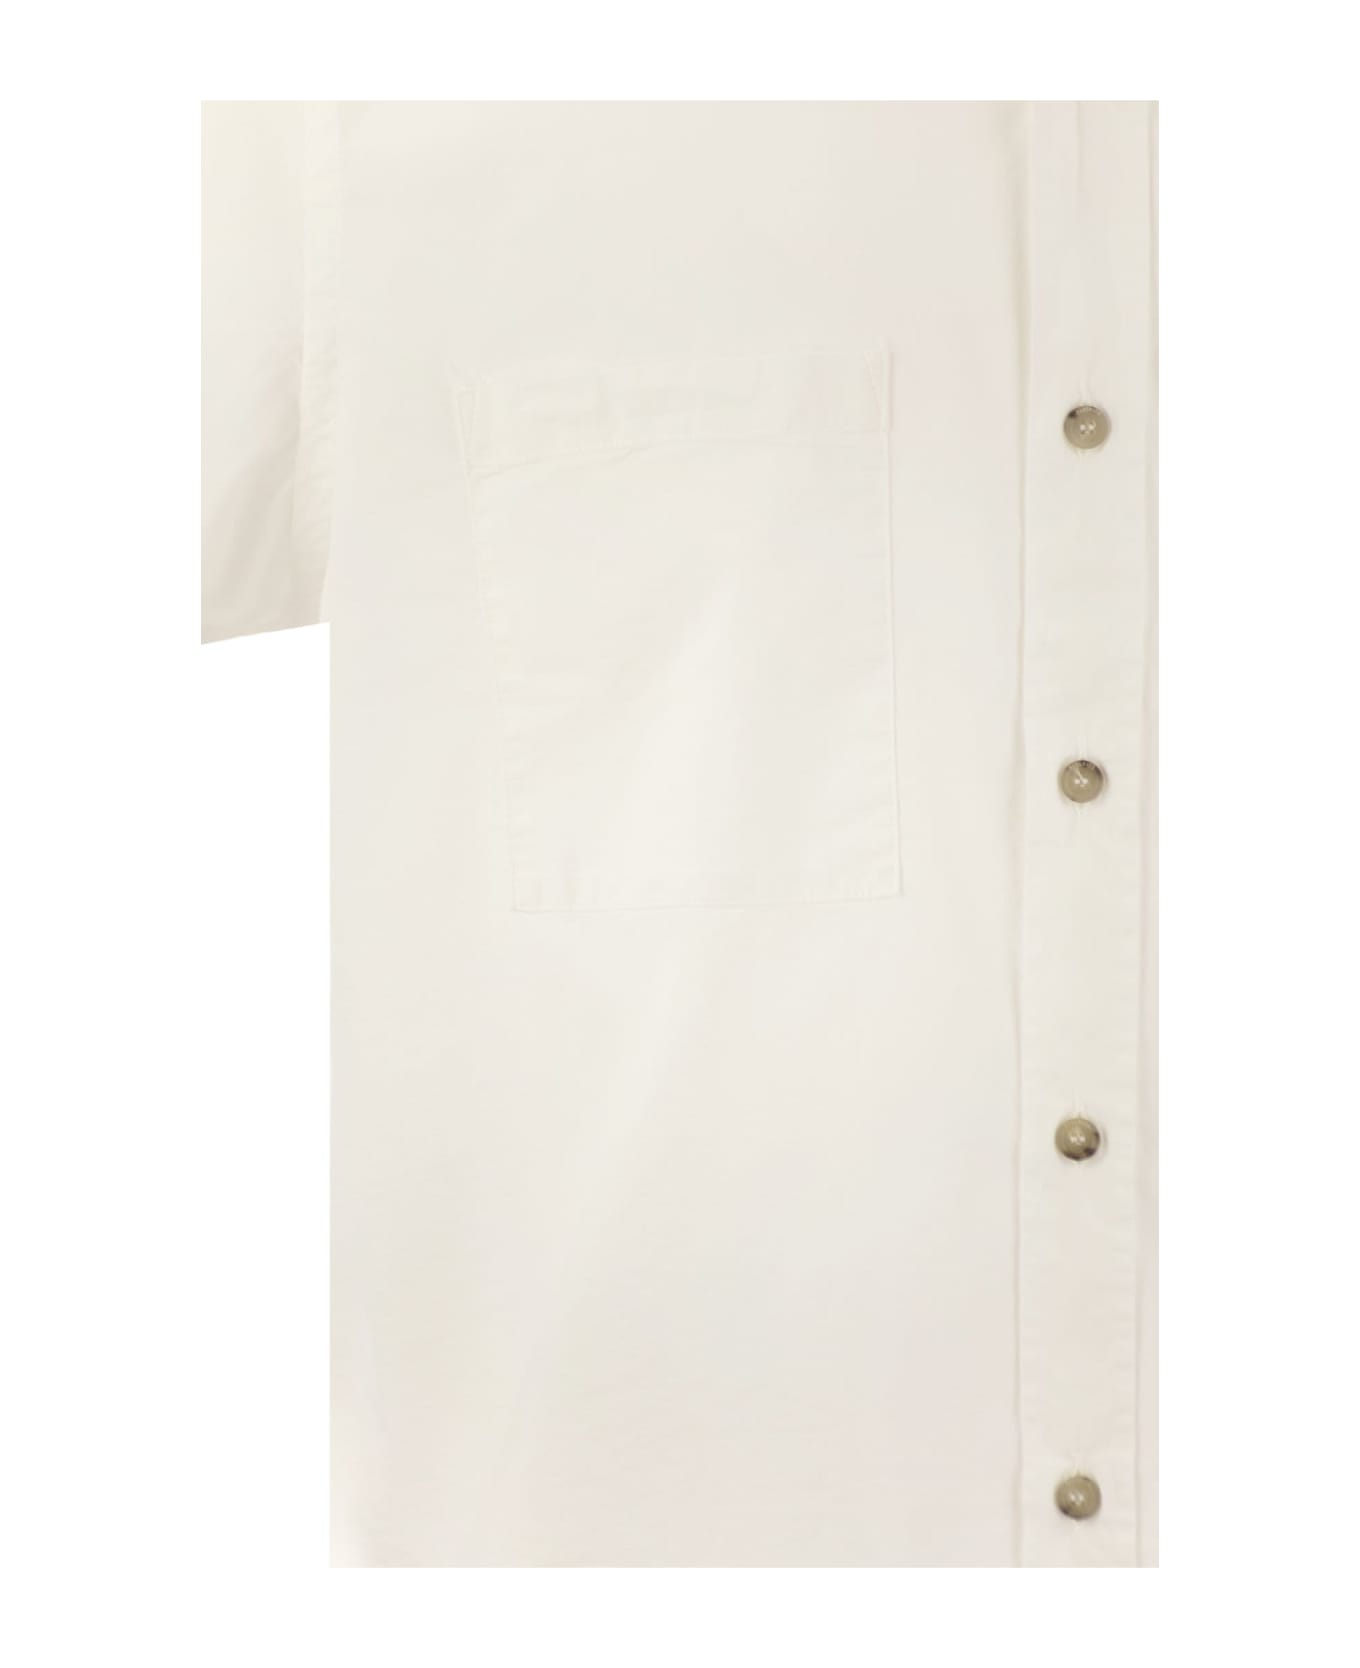 Peserico Stretch Cotton Poplin Shirt - White